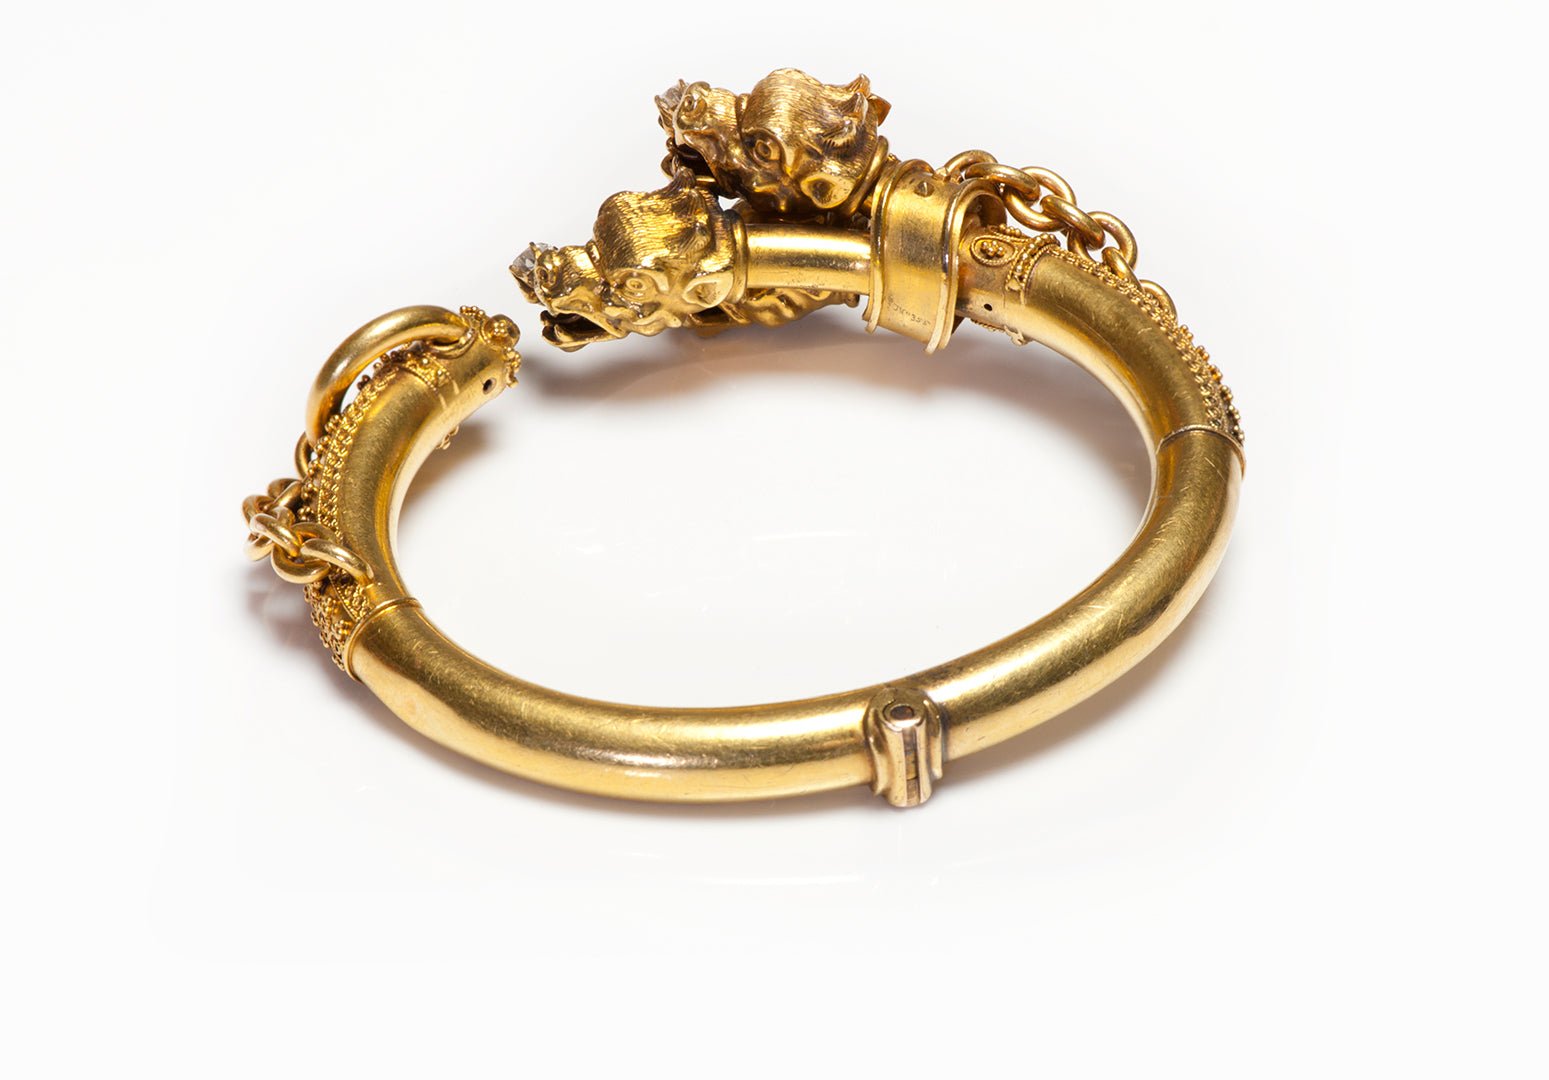 Antique Etruscan Revival Gold Diamond Cerberus Cuff Bracelet